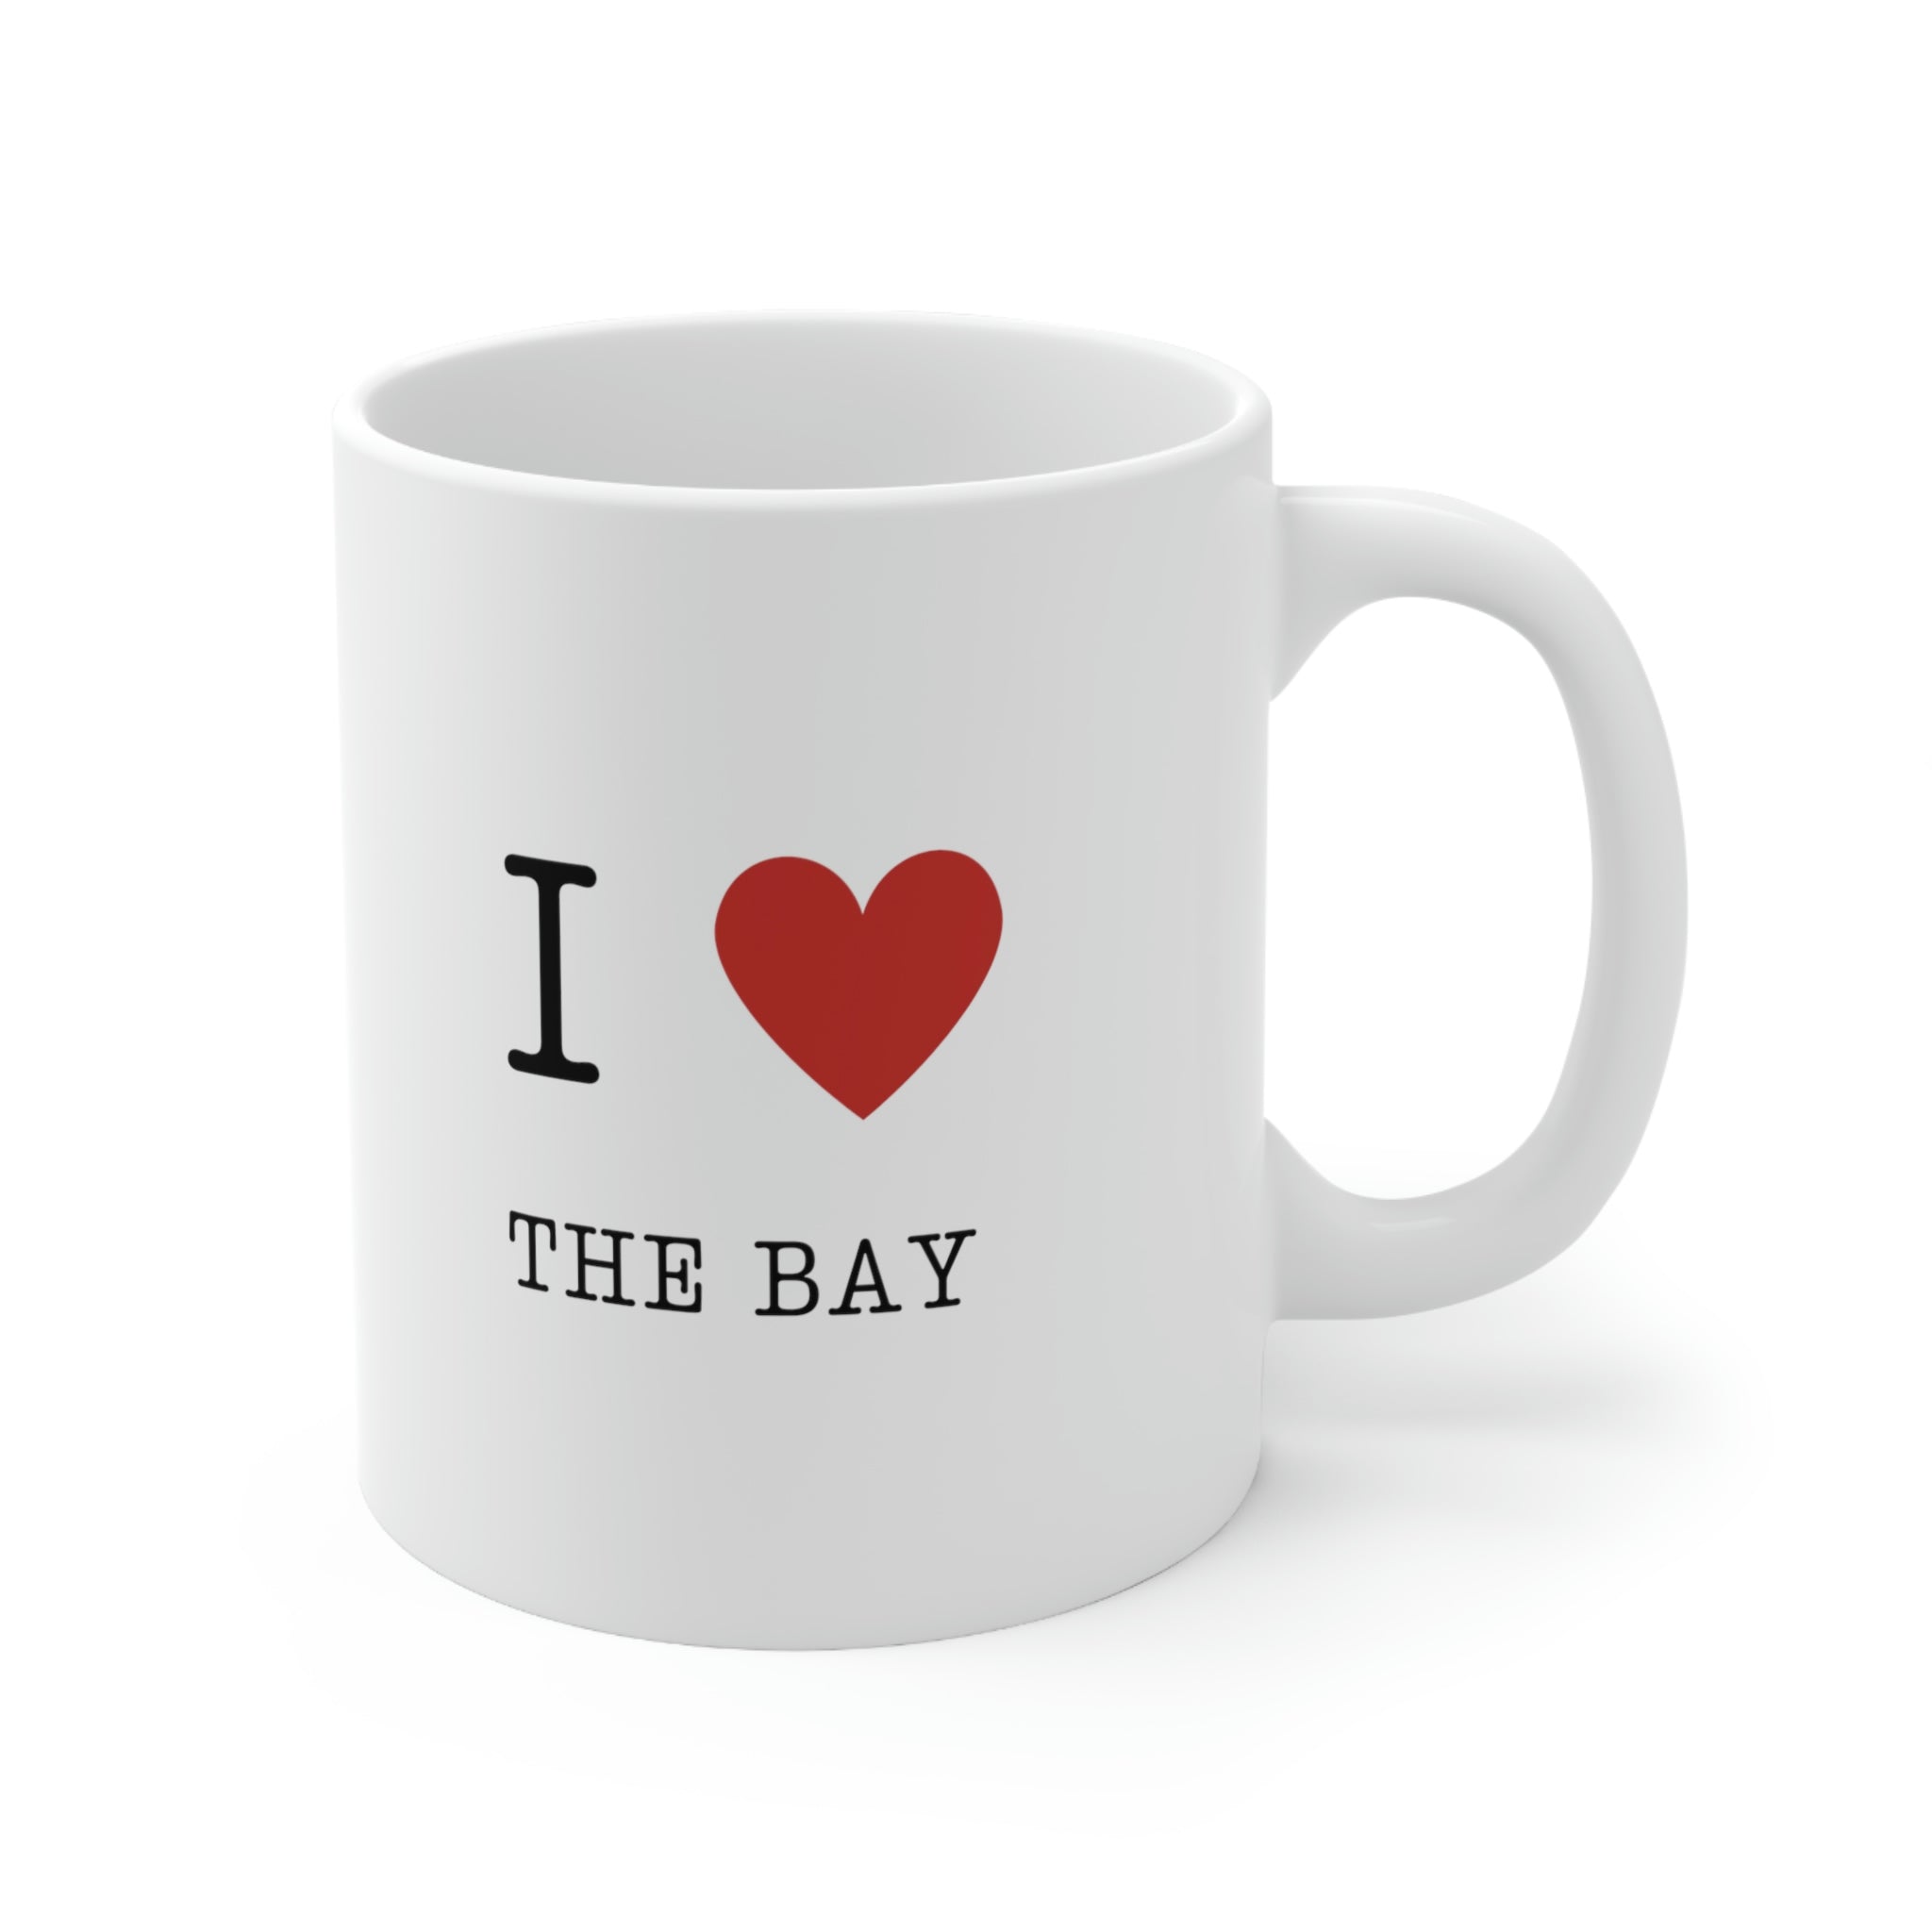 Love Your Club Mug 11oz - The Bay